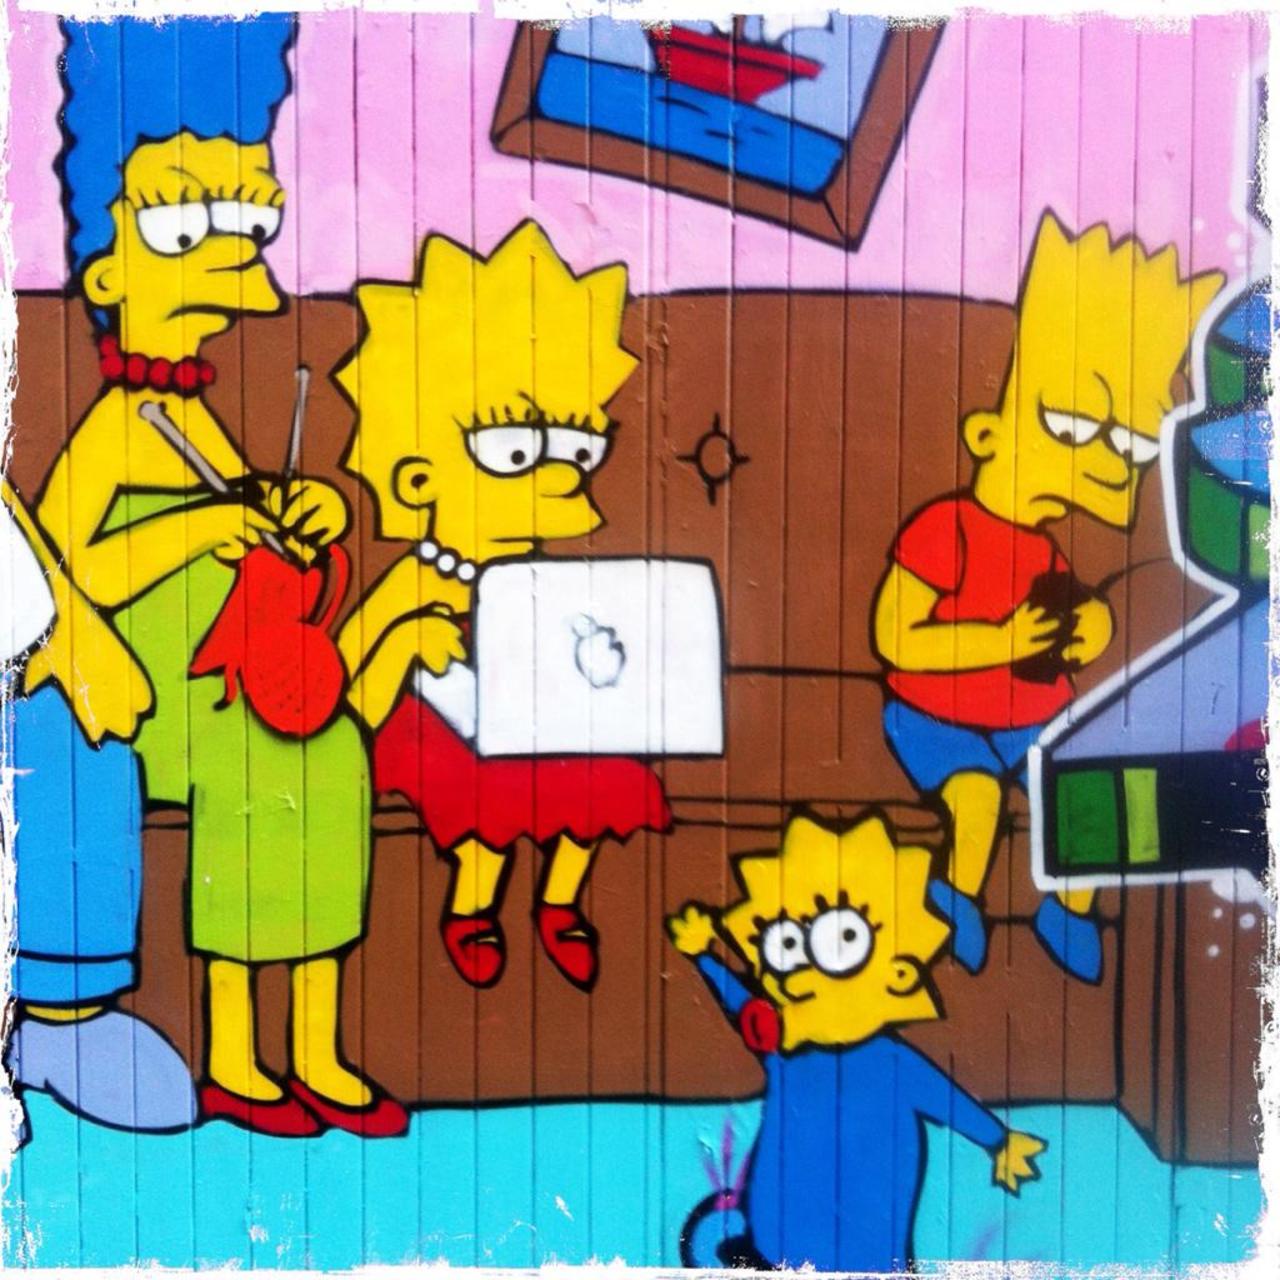 Part II - The Simpsons of Shoreditch #streetart #graffiti  

Fashion Street http://t.co/RfuIU9VLB6